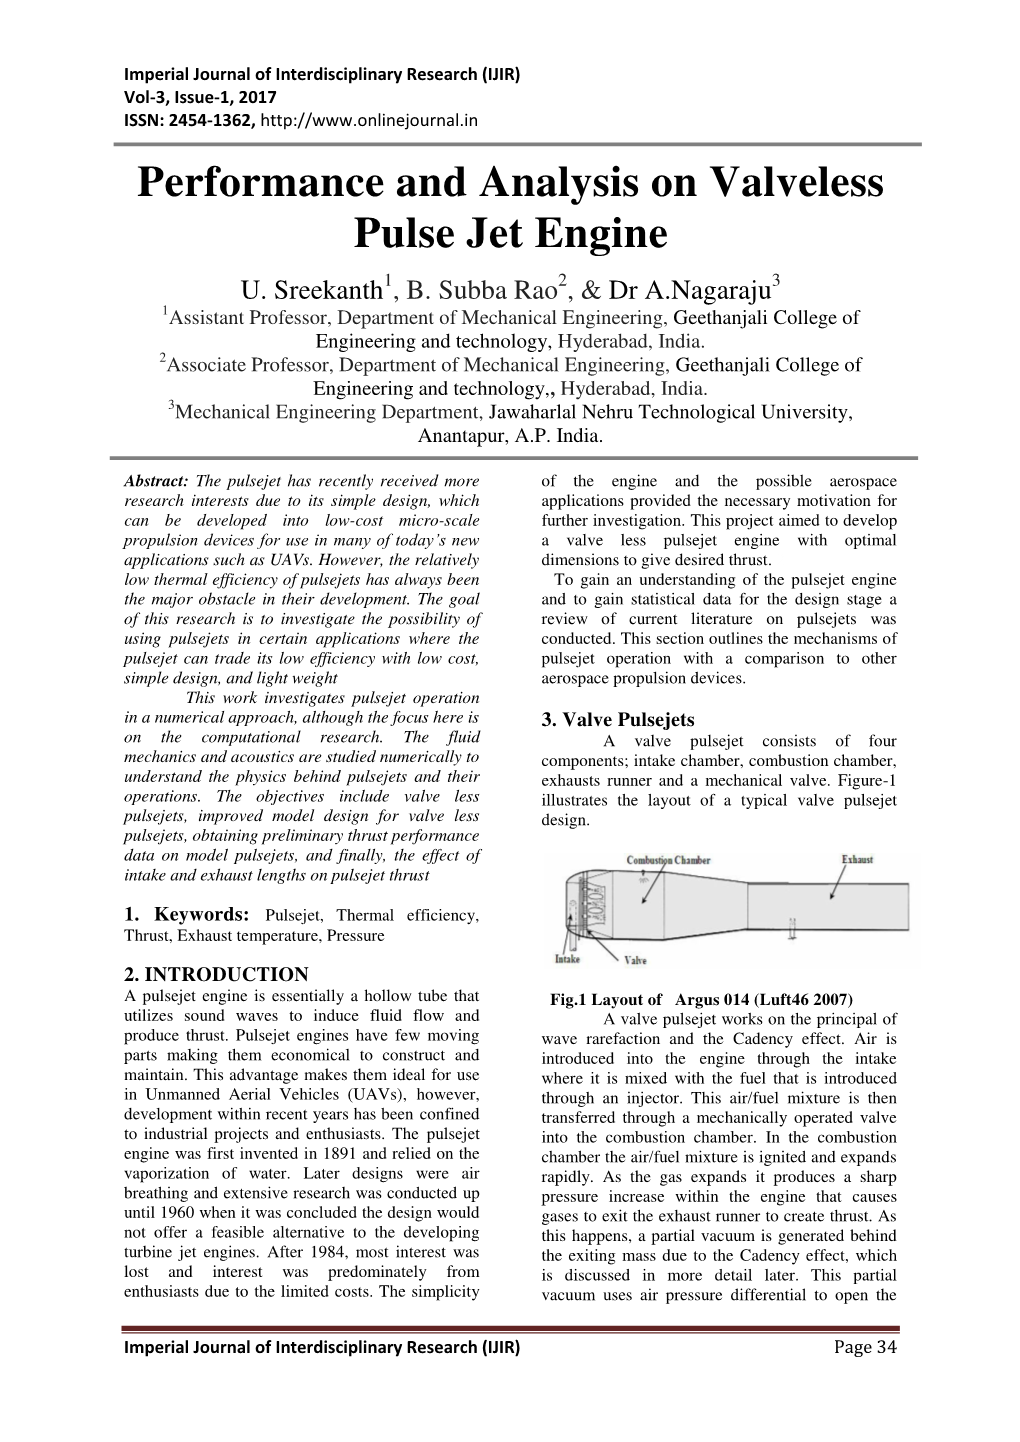 Performance and Analysis on Valveless Pulse Jet Engine U